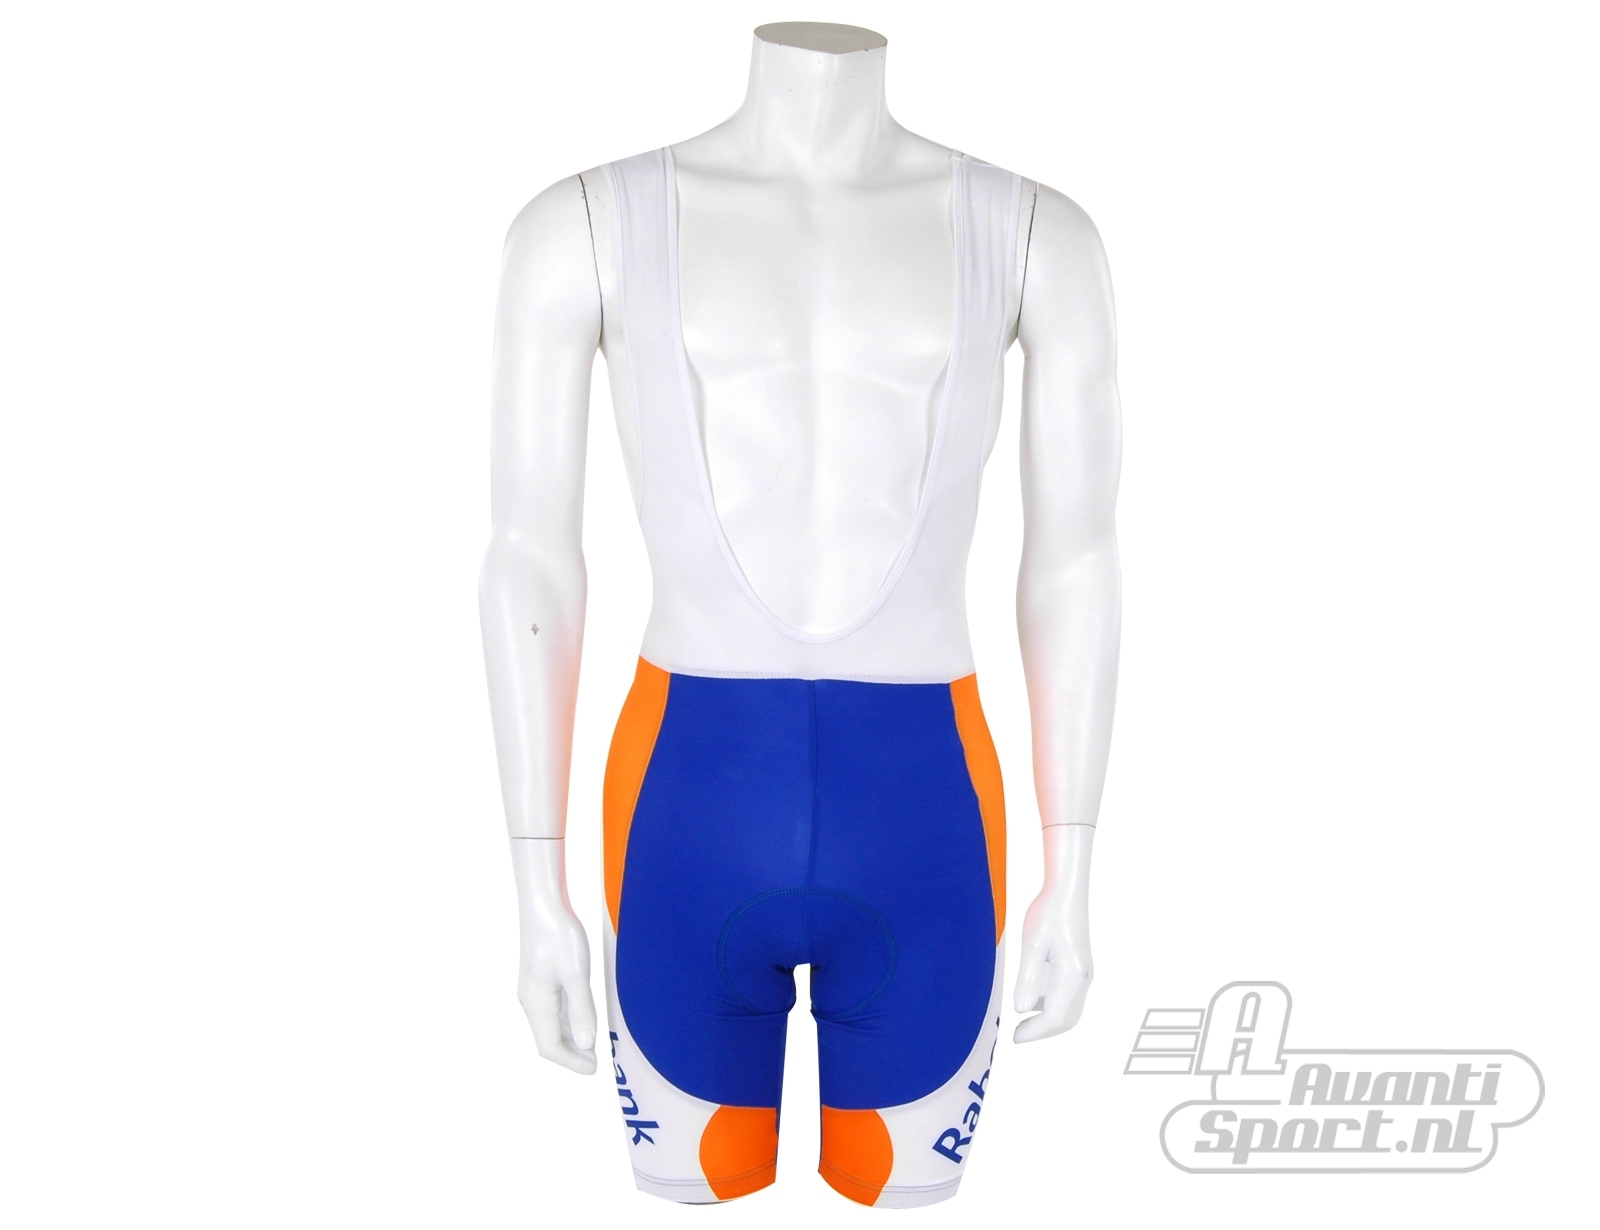 Avantisport - Agu - Broek K Brt Rabobank - Orange/white/blue